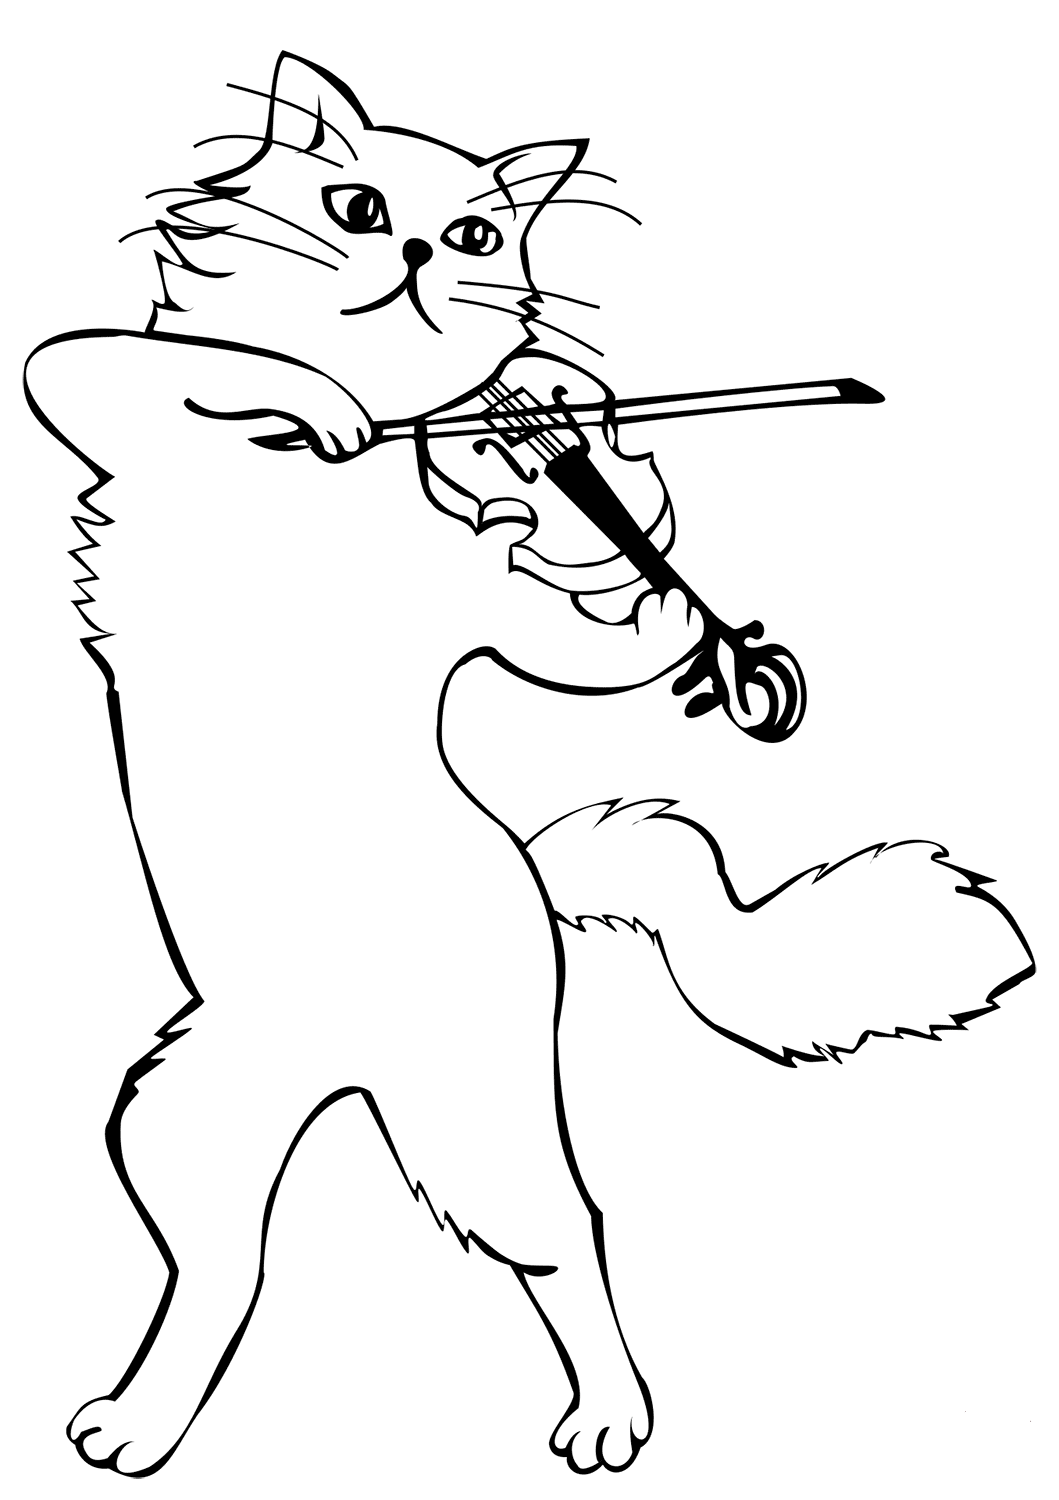 Cat Playing Violin Coloring Page - Free Printable Coloring ...